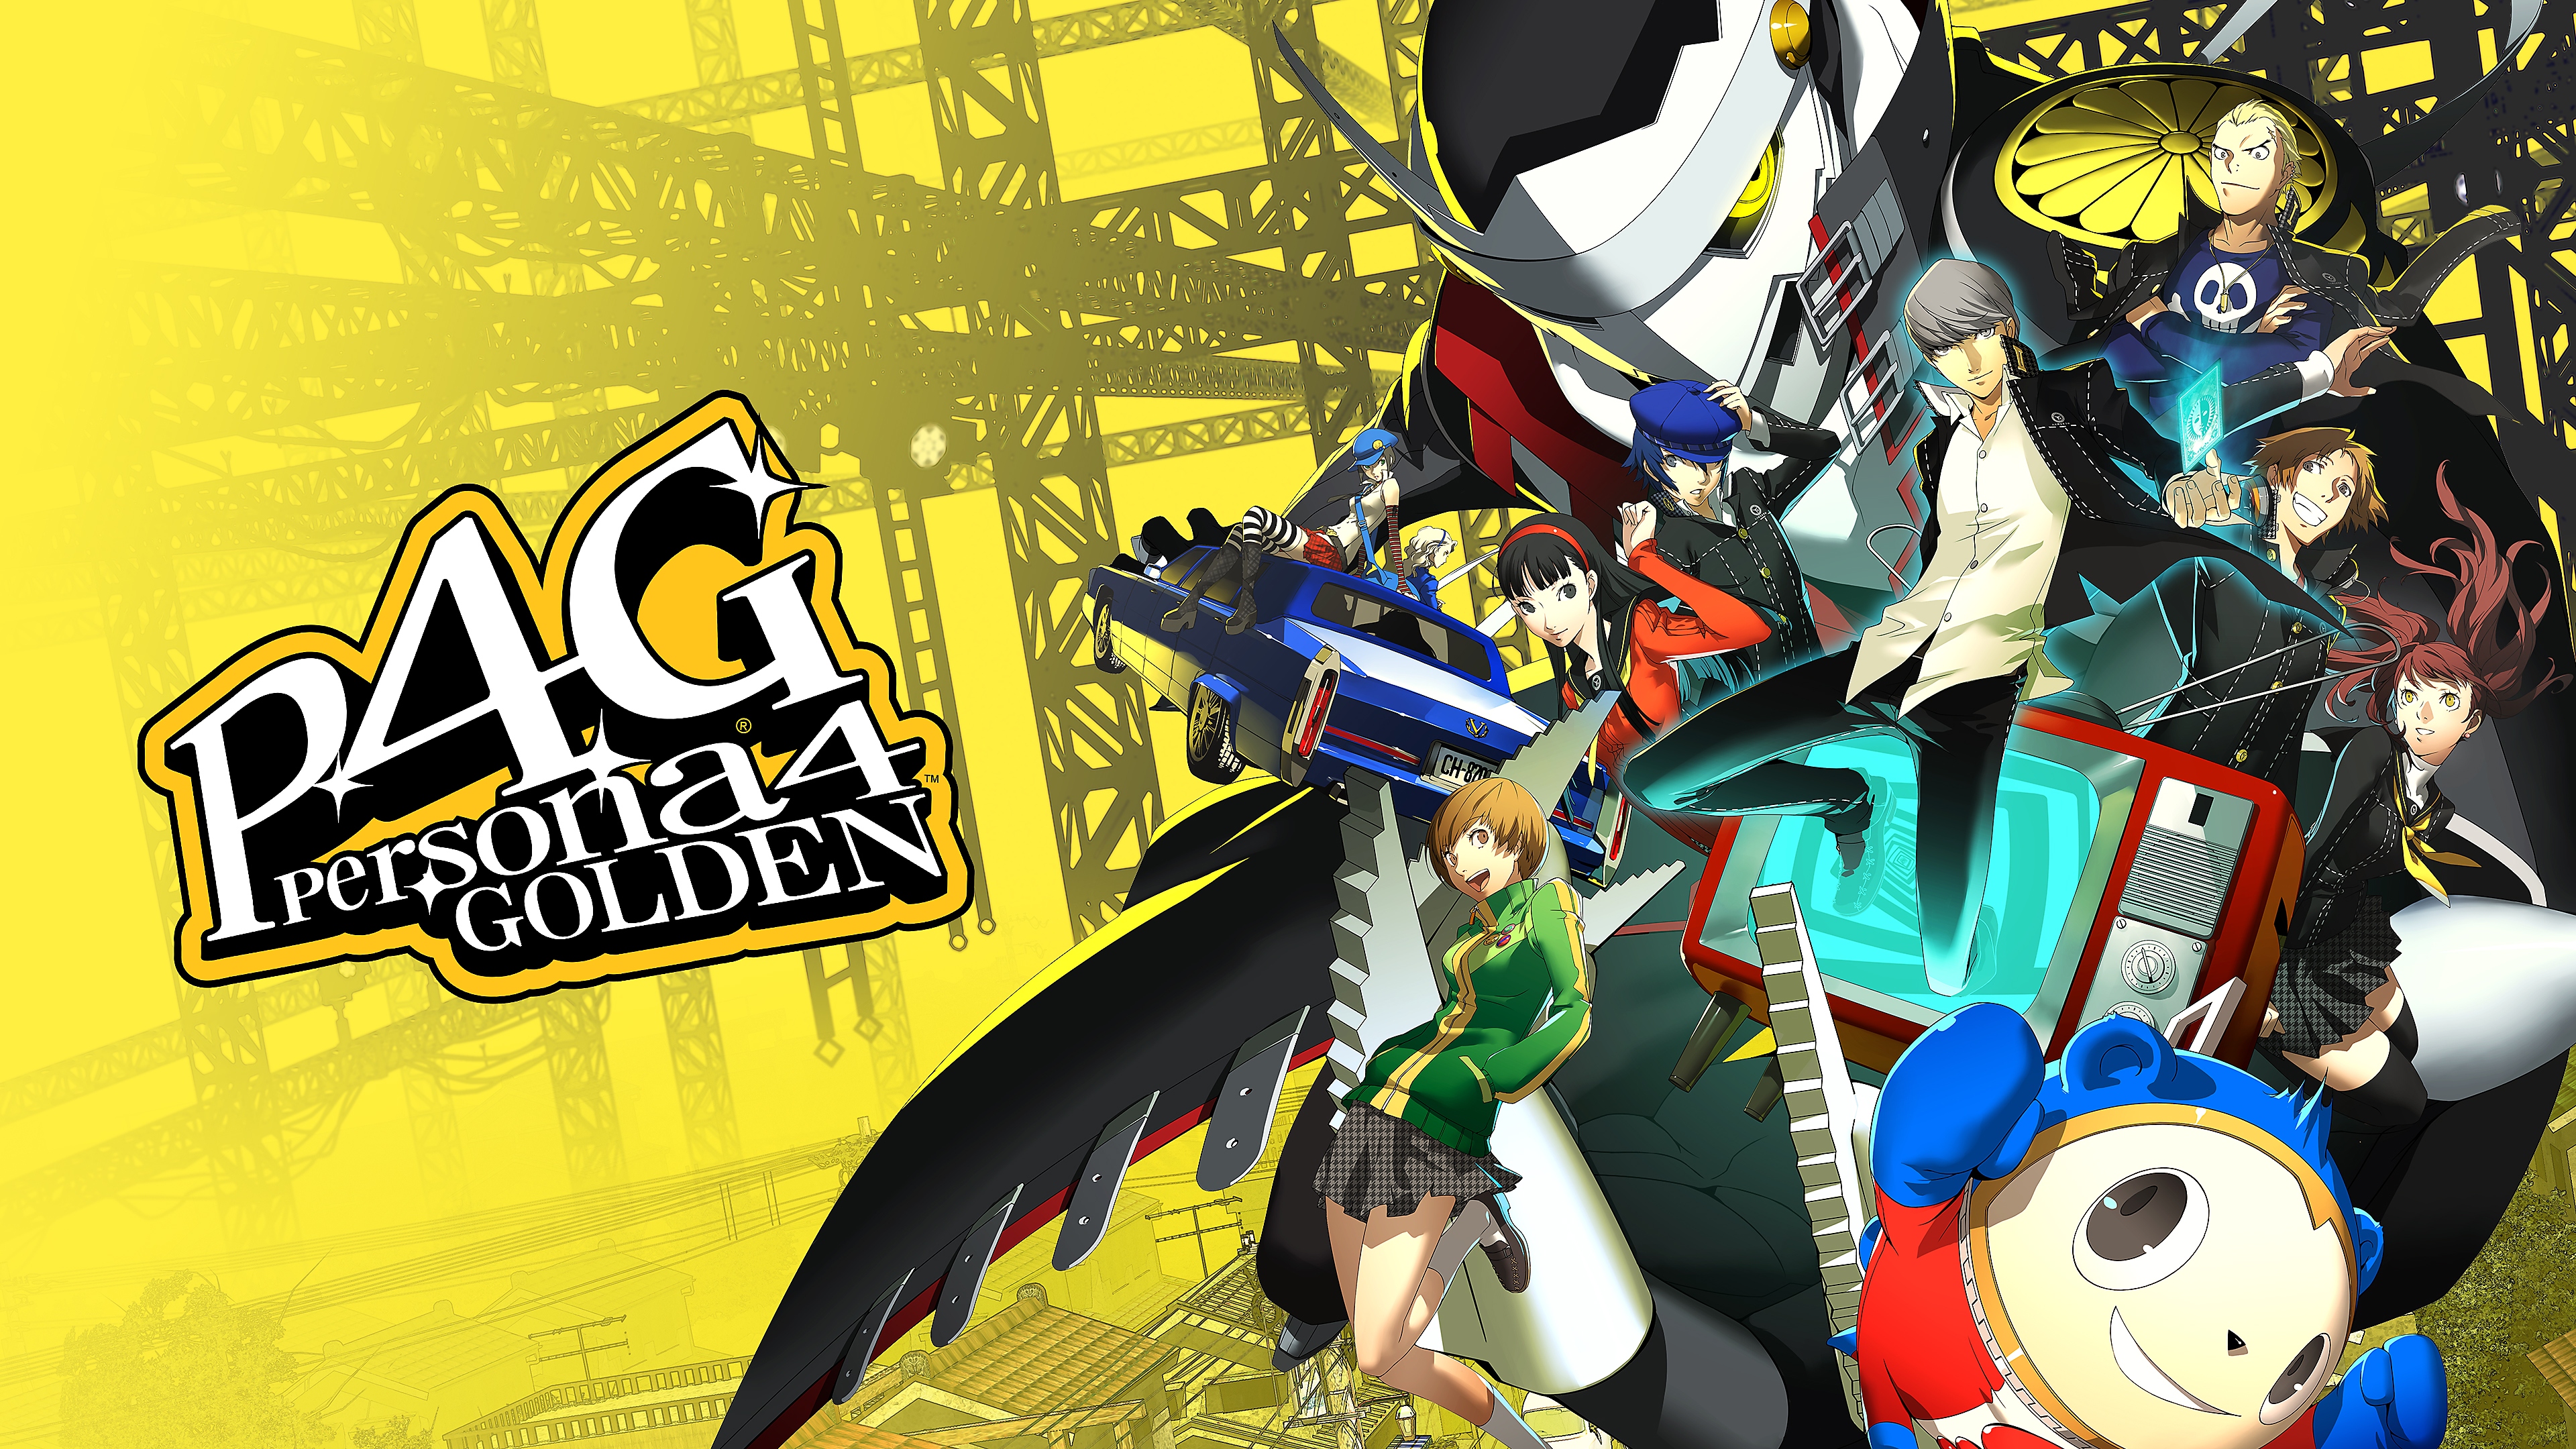 Persona 3 Portable & Persona 4 Golden - متوفرة الآن | ألعاب PS4